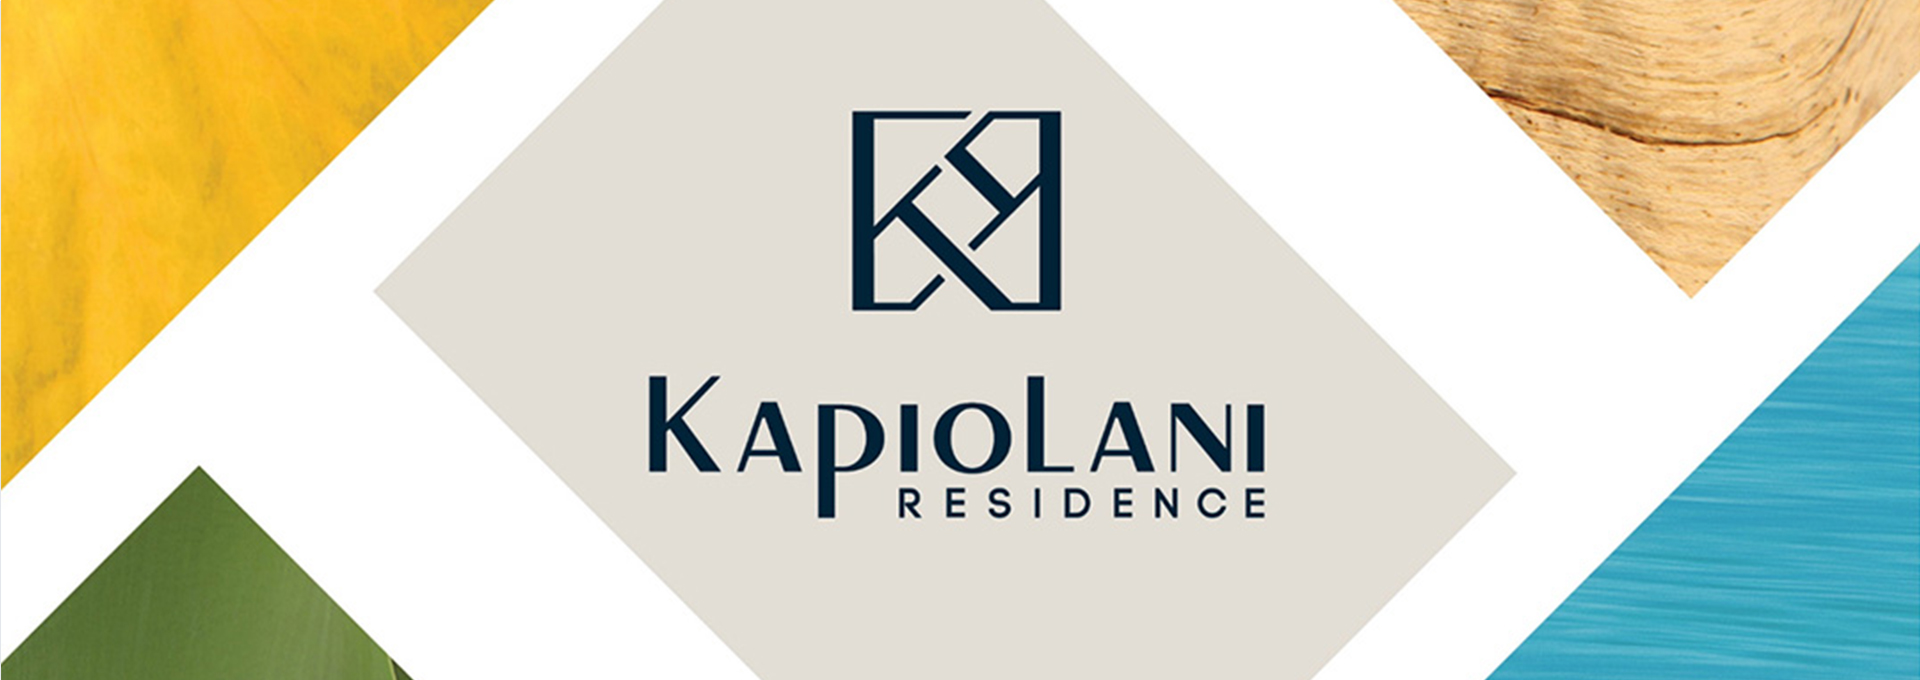 kapiolani residence high rise condominium marketing